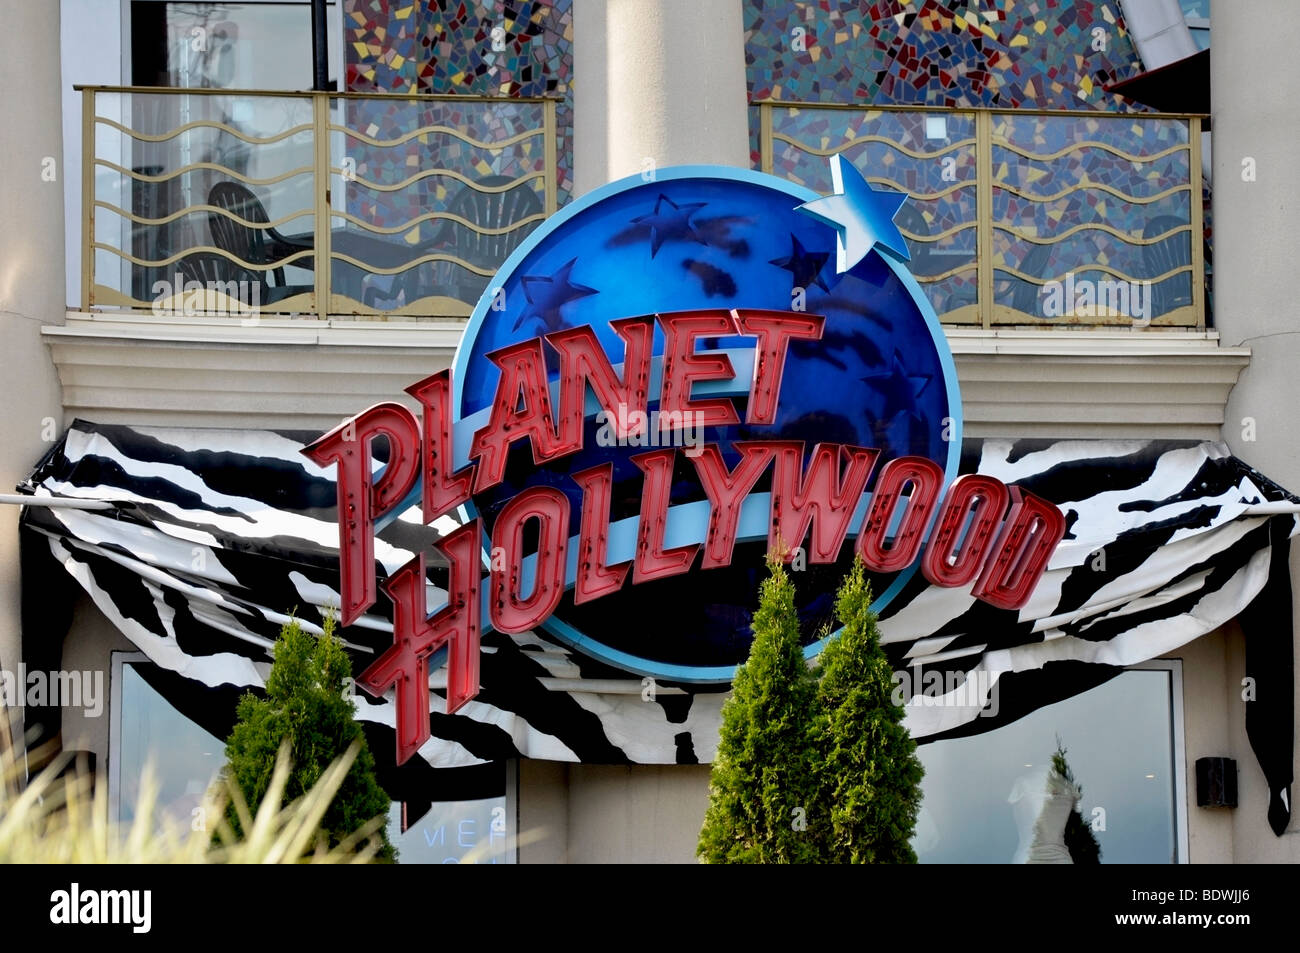 Planet Hollywood Restaurant - Niagara Falls, Ontario, Canada Stock Photo